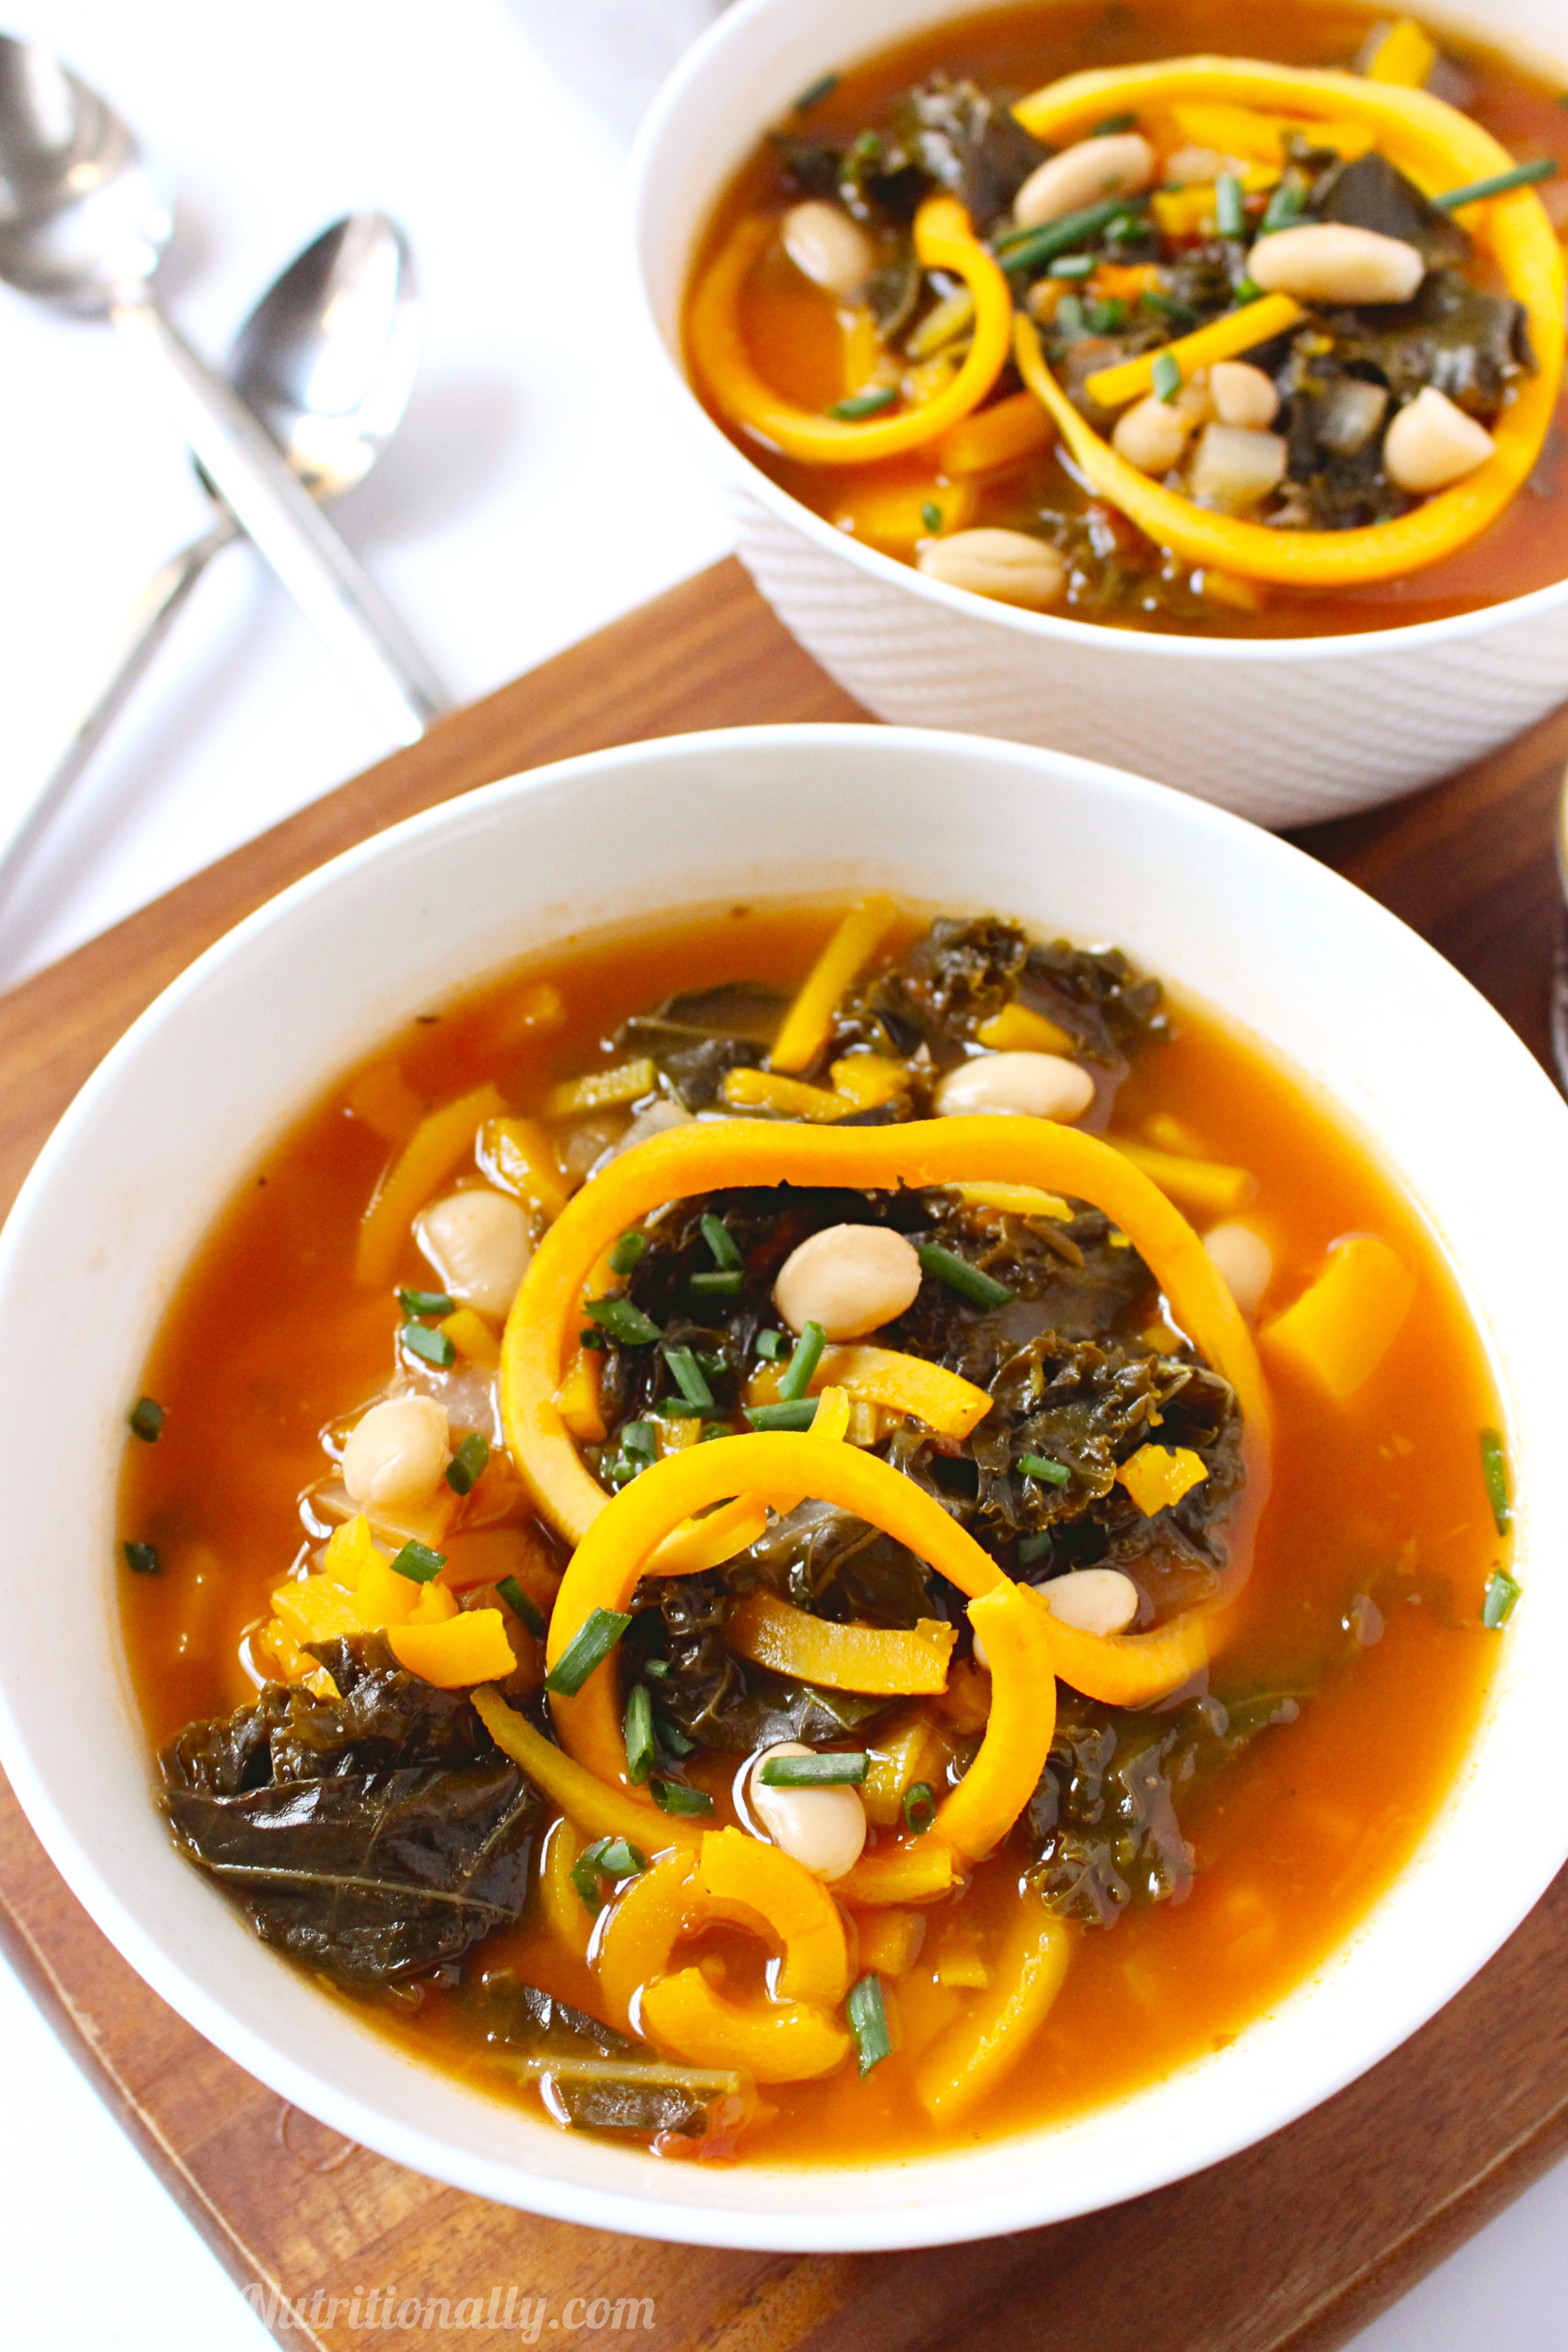 Kale and Butternut Squash Noodle Soup | C it Nutritionally